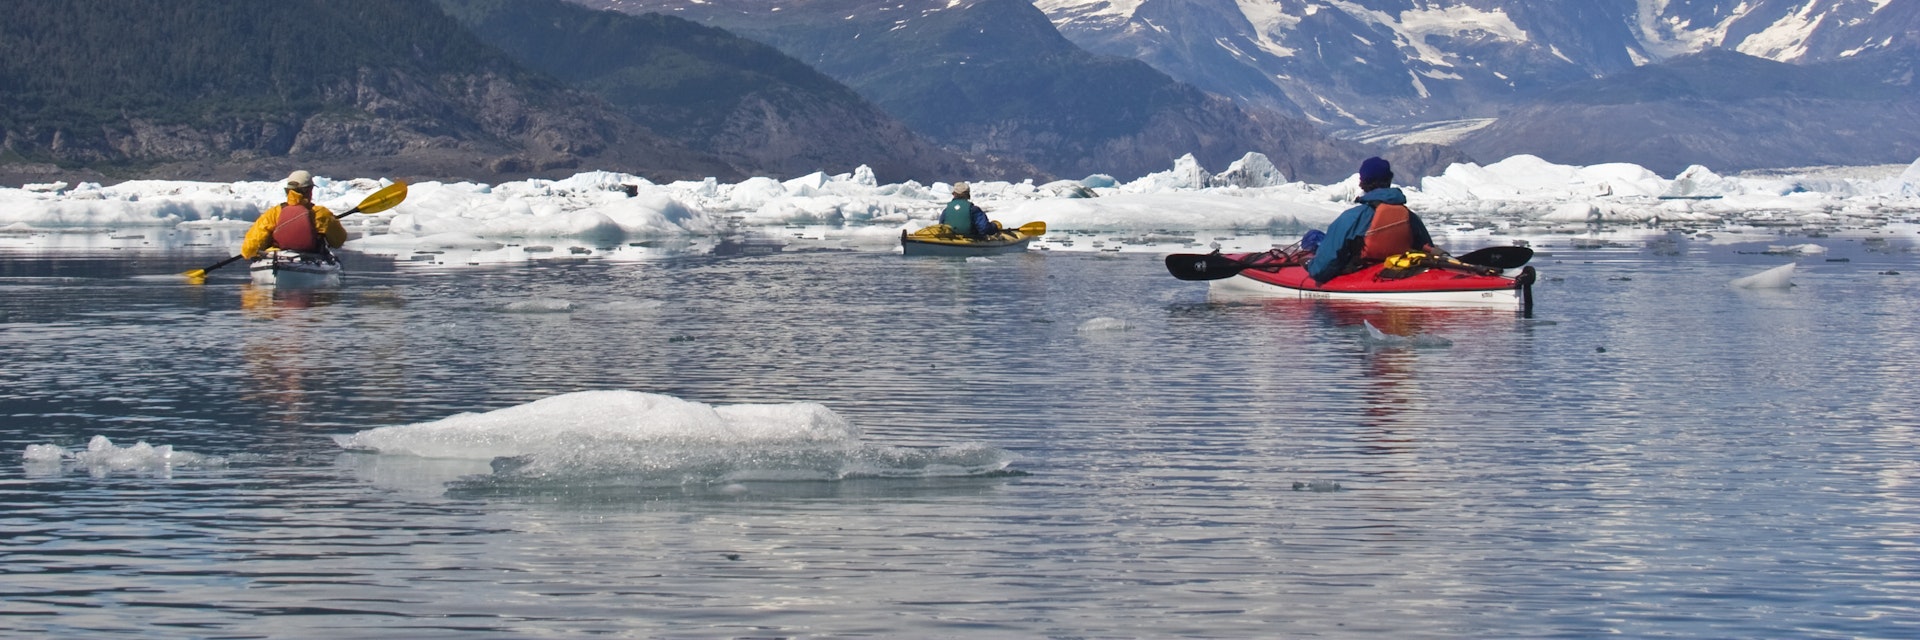 Alaska, Prince William Sound, Sea kayakers, Columbia Bay, Columbia Glacier, Icebergs, Brash Ice,